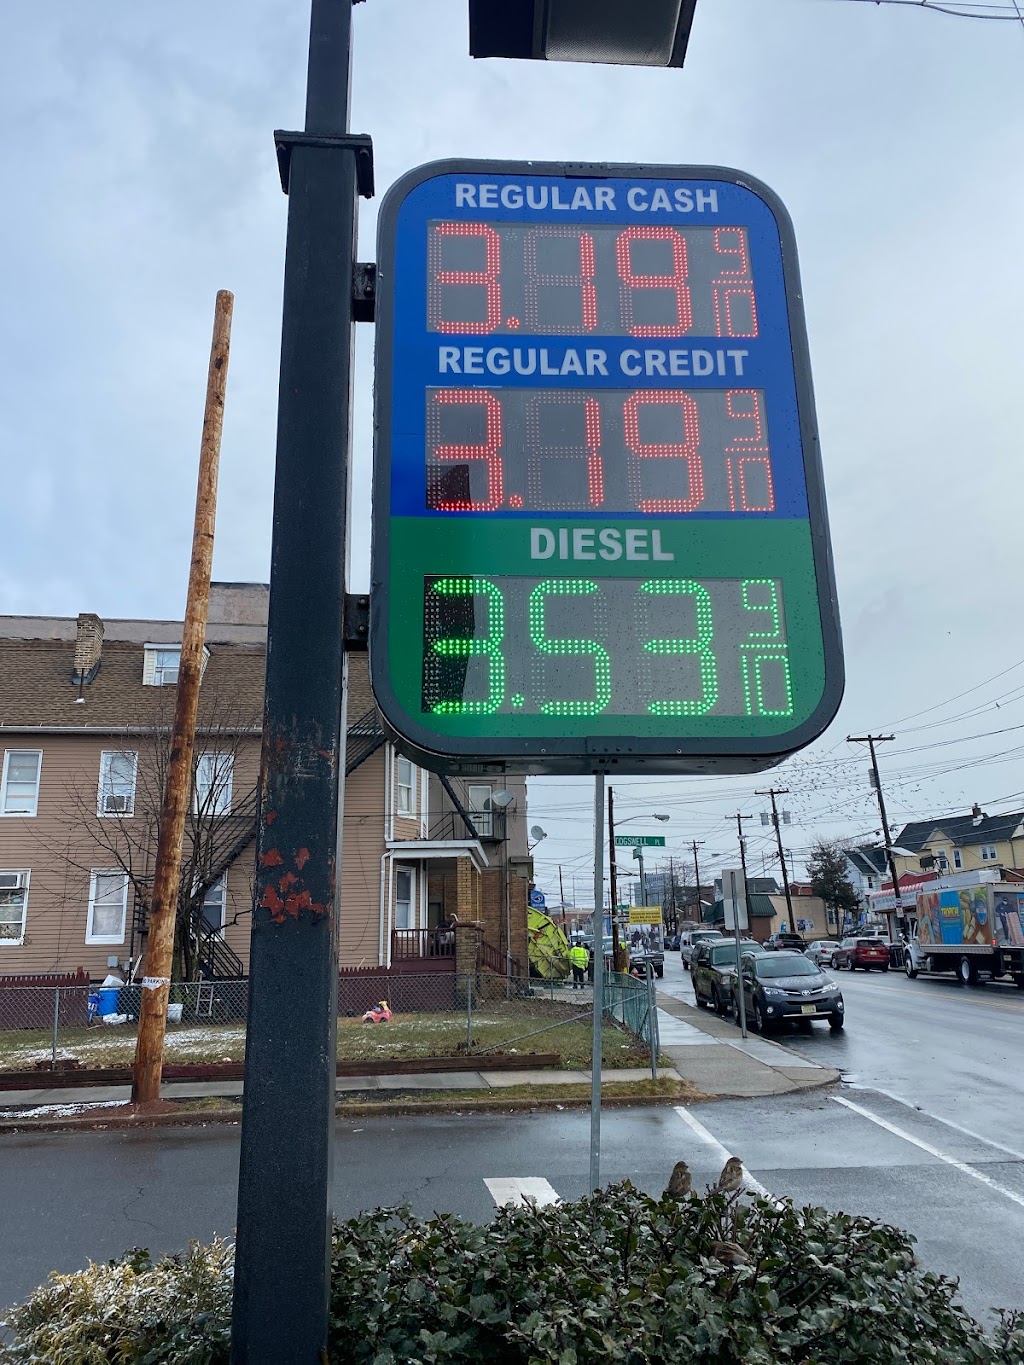 Delta gas station | 217 French St, New Brunswick, NJ 08901 | Phone: (201) 920-4776